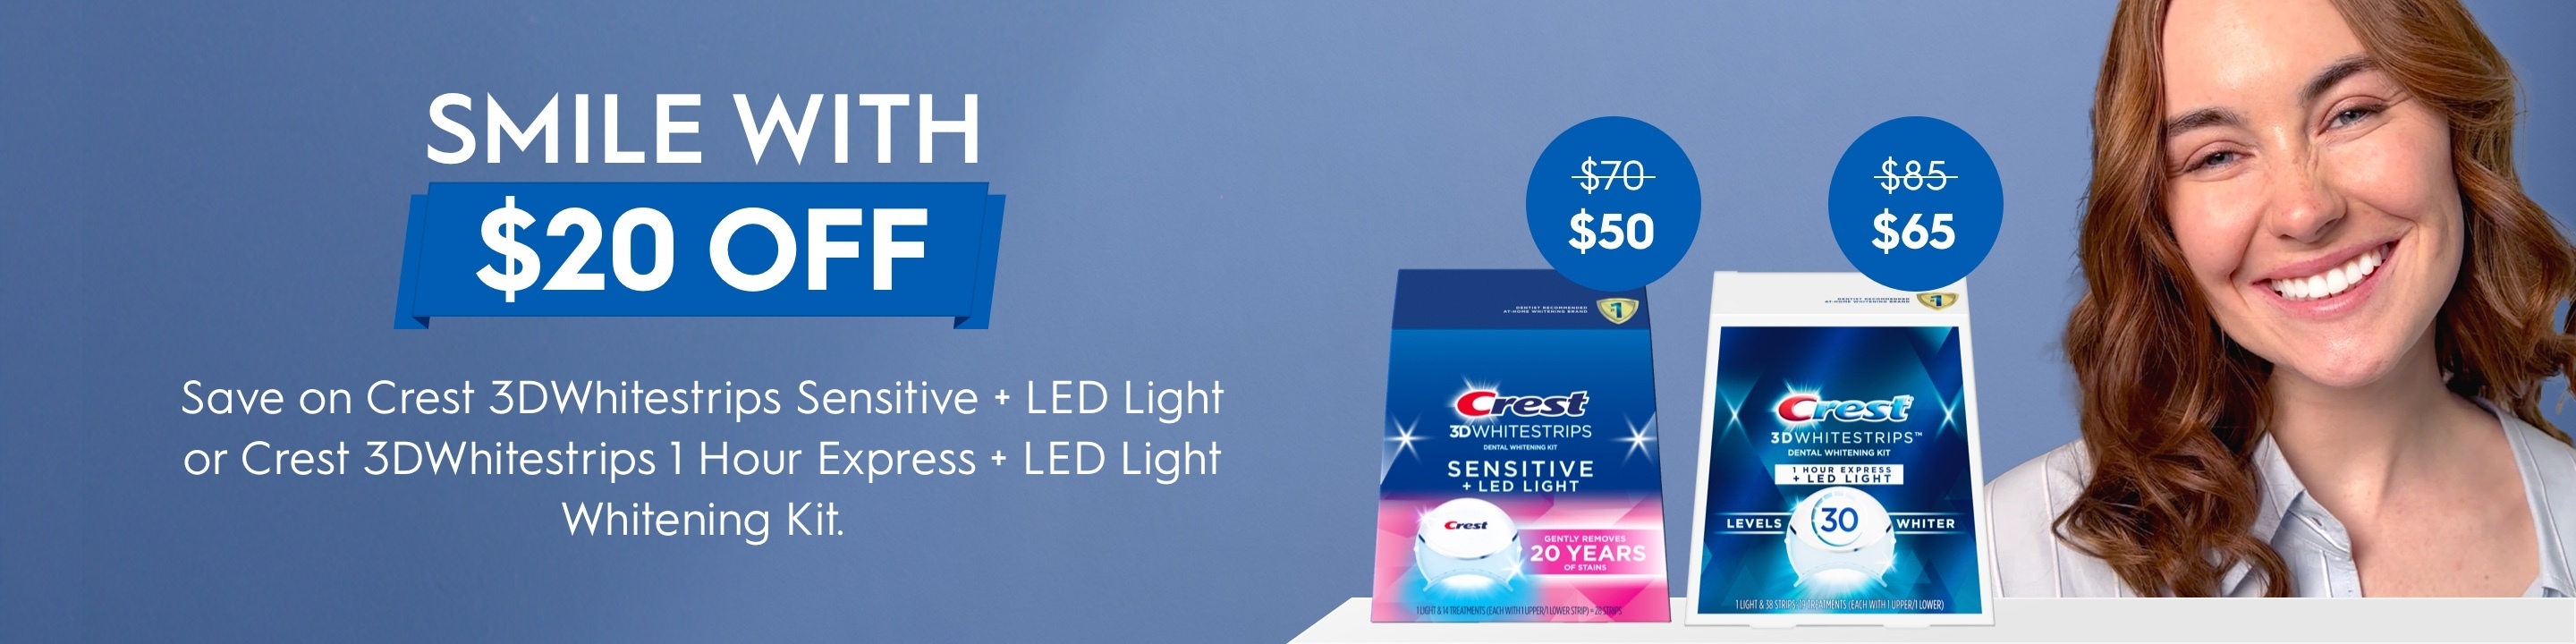 Save on Crest 3DWhitestrips Sensitive + LED Light or Crest 3DWhitestrips 1 Hour Express  + LED Light Whitening Kit